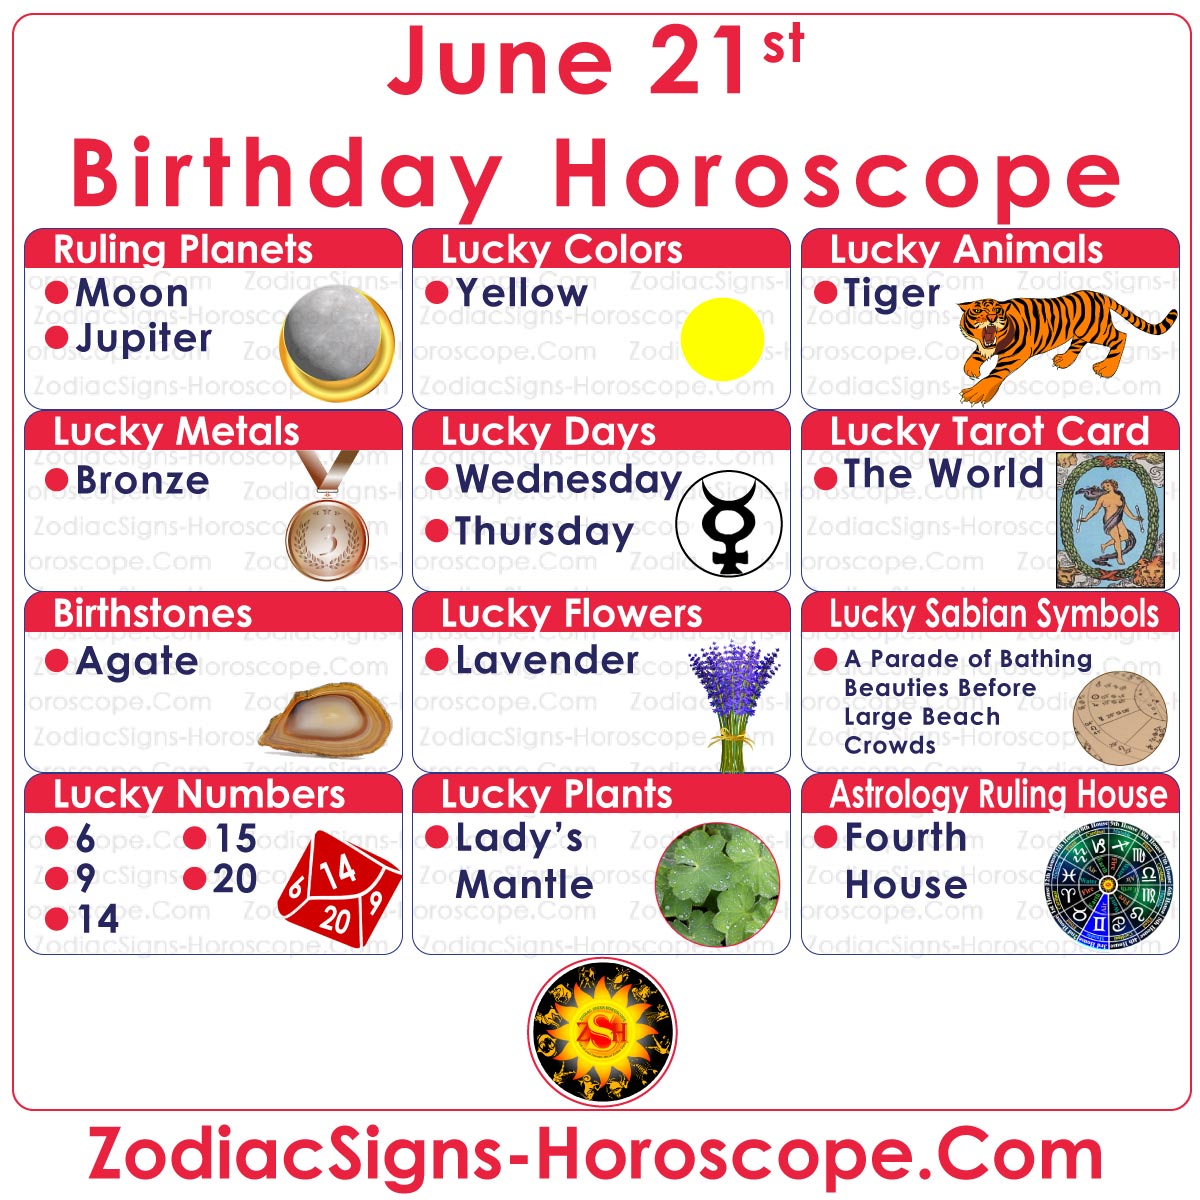 June 21 Zodiac (Gemini) Horoscope Birthday Personality and Lucky Things